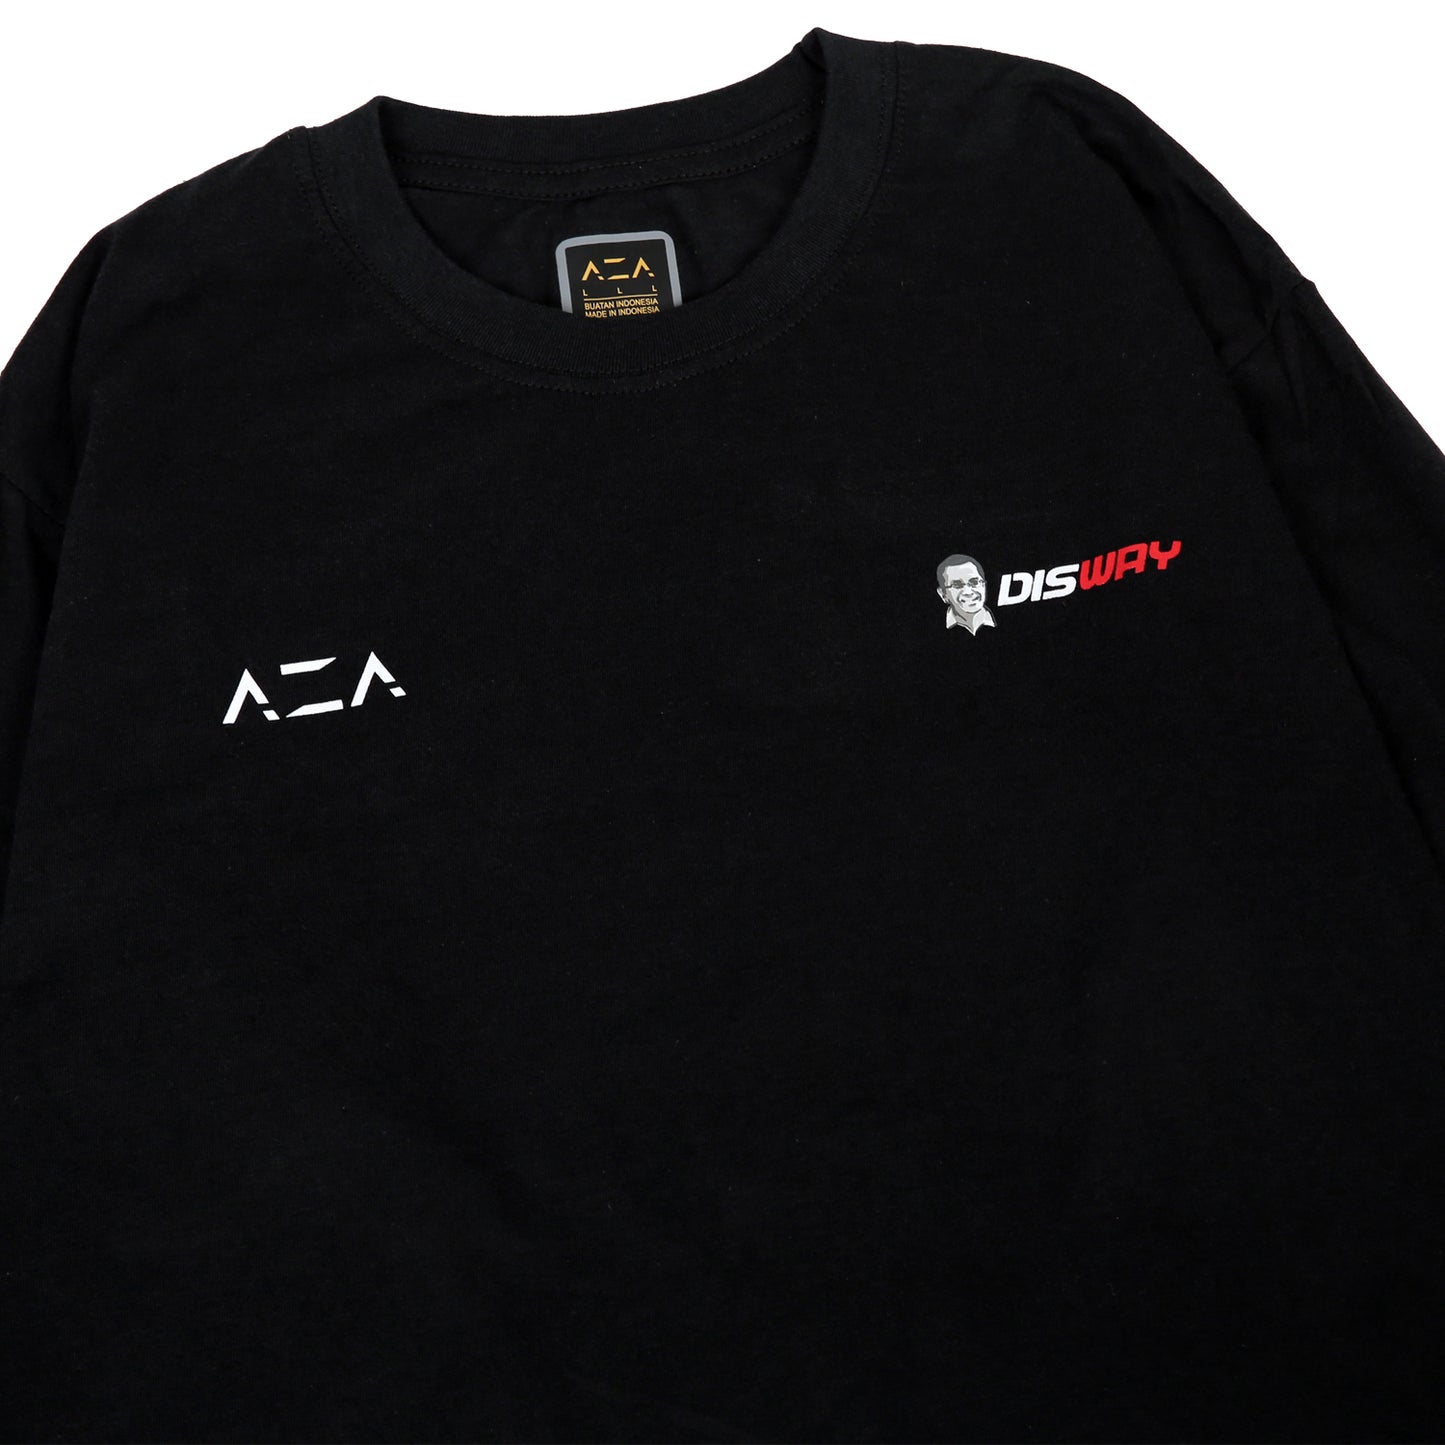 AZA x Disway Back Font Long Sleeve T-Shirt - Black